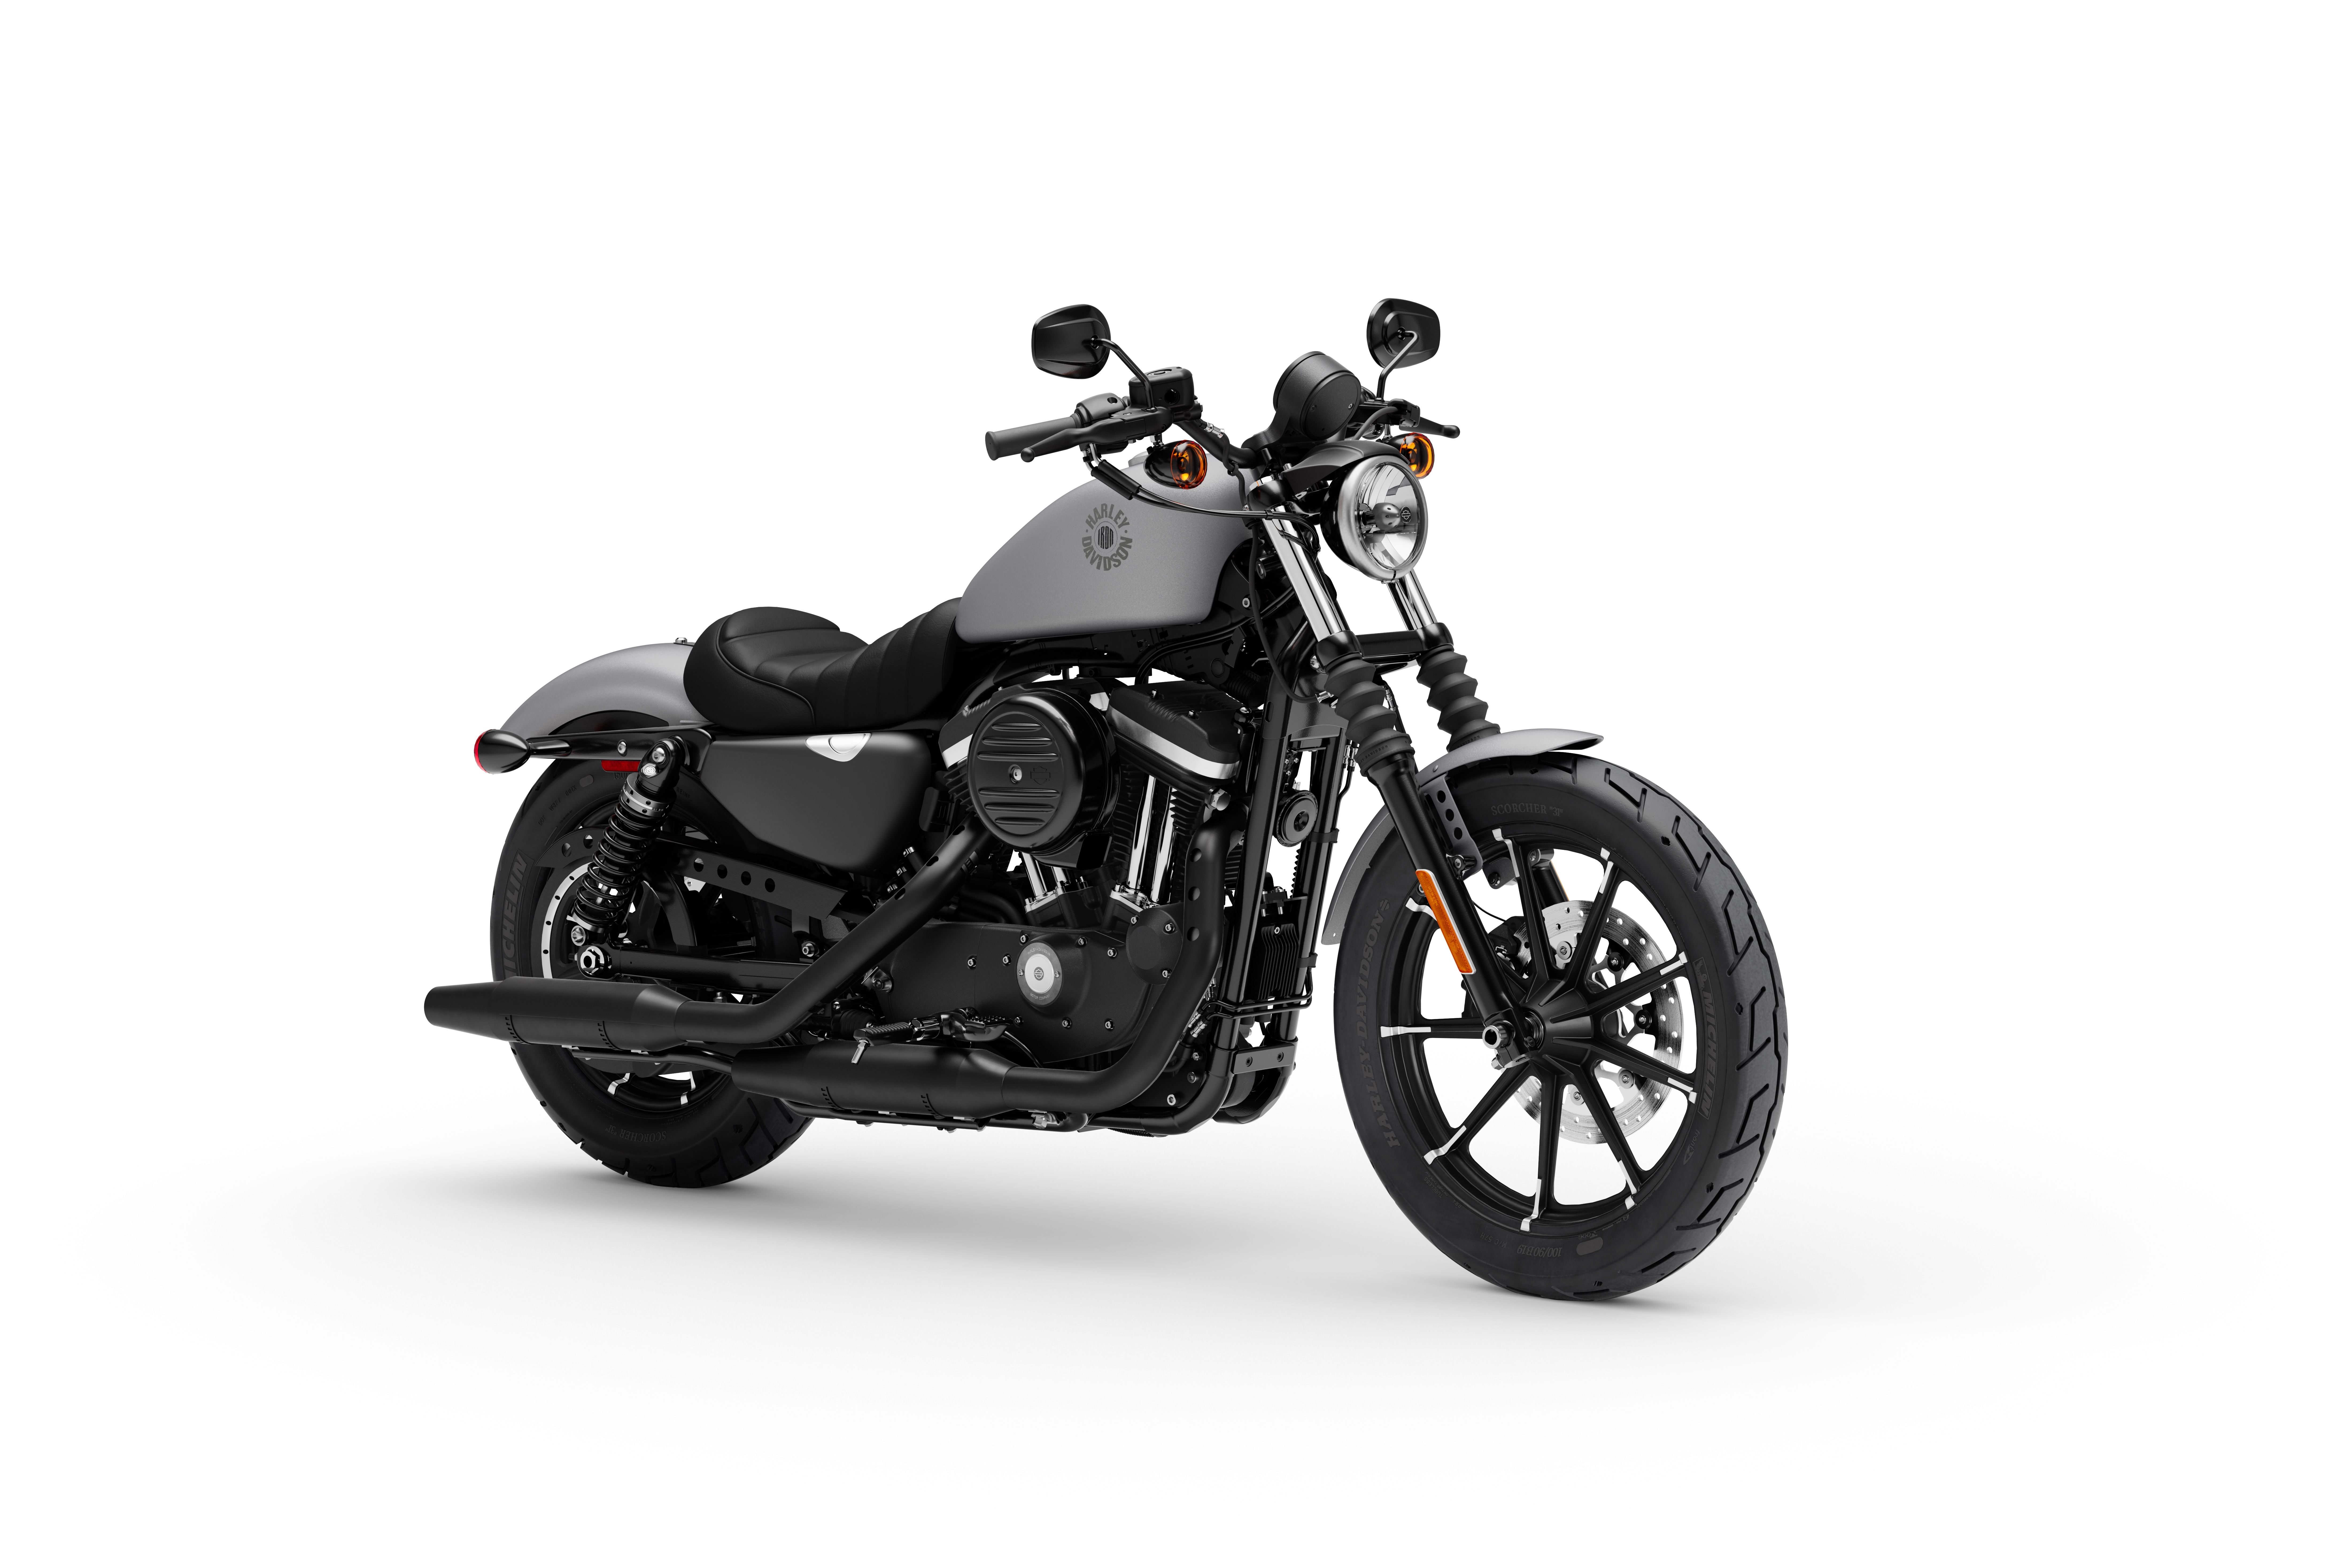 Harley Davidson Bike Basic Price In India Promotion Off60